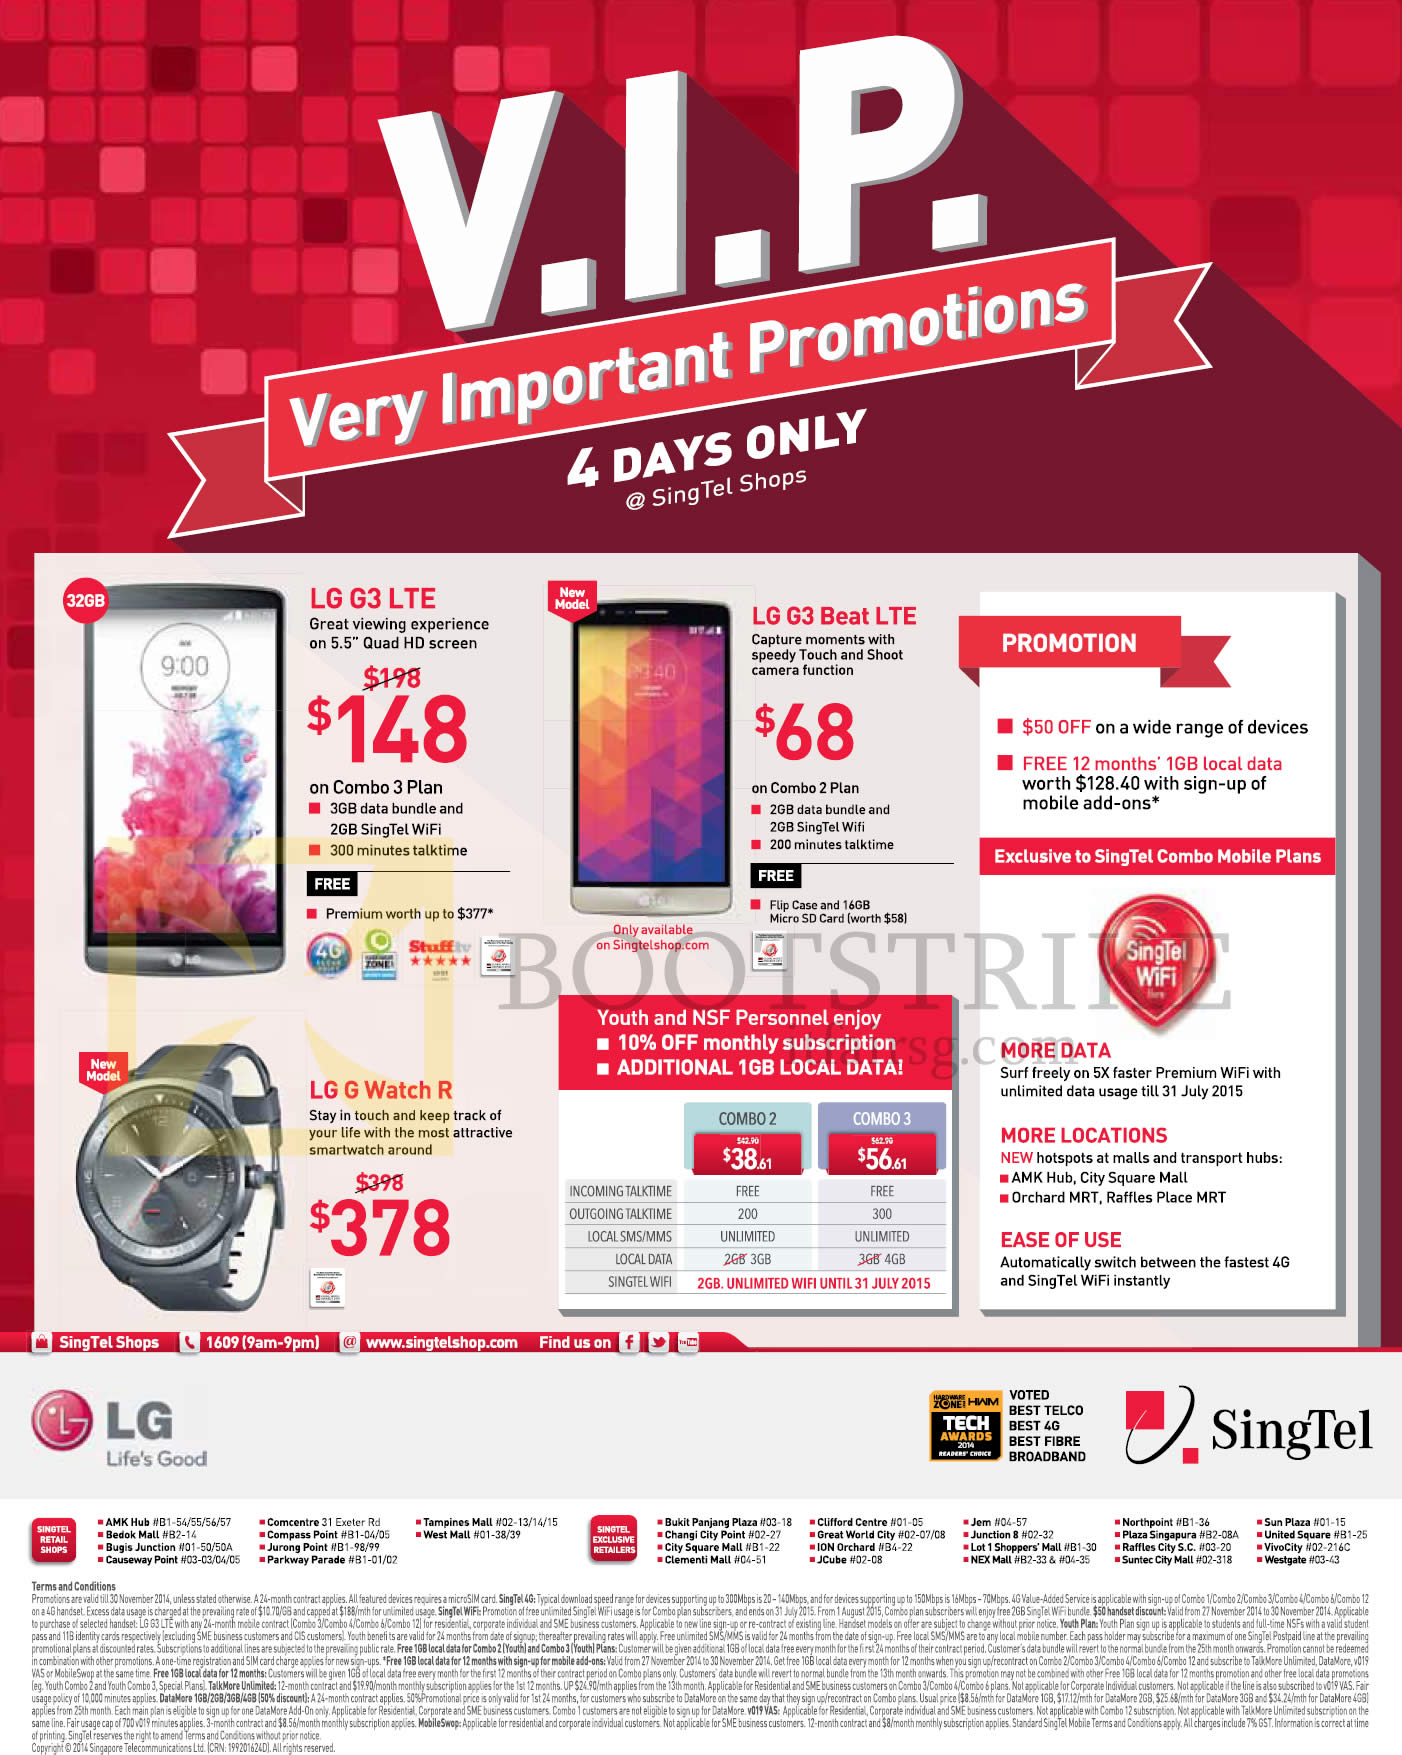 SITEX 2014 price list image brochure of Singtel Mobile LG G3, LG G3 Beat, LG G Watch R